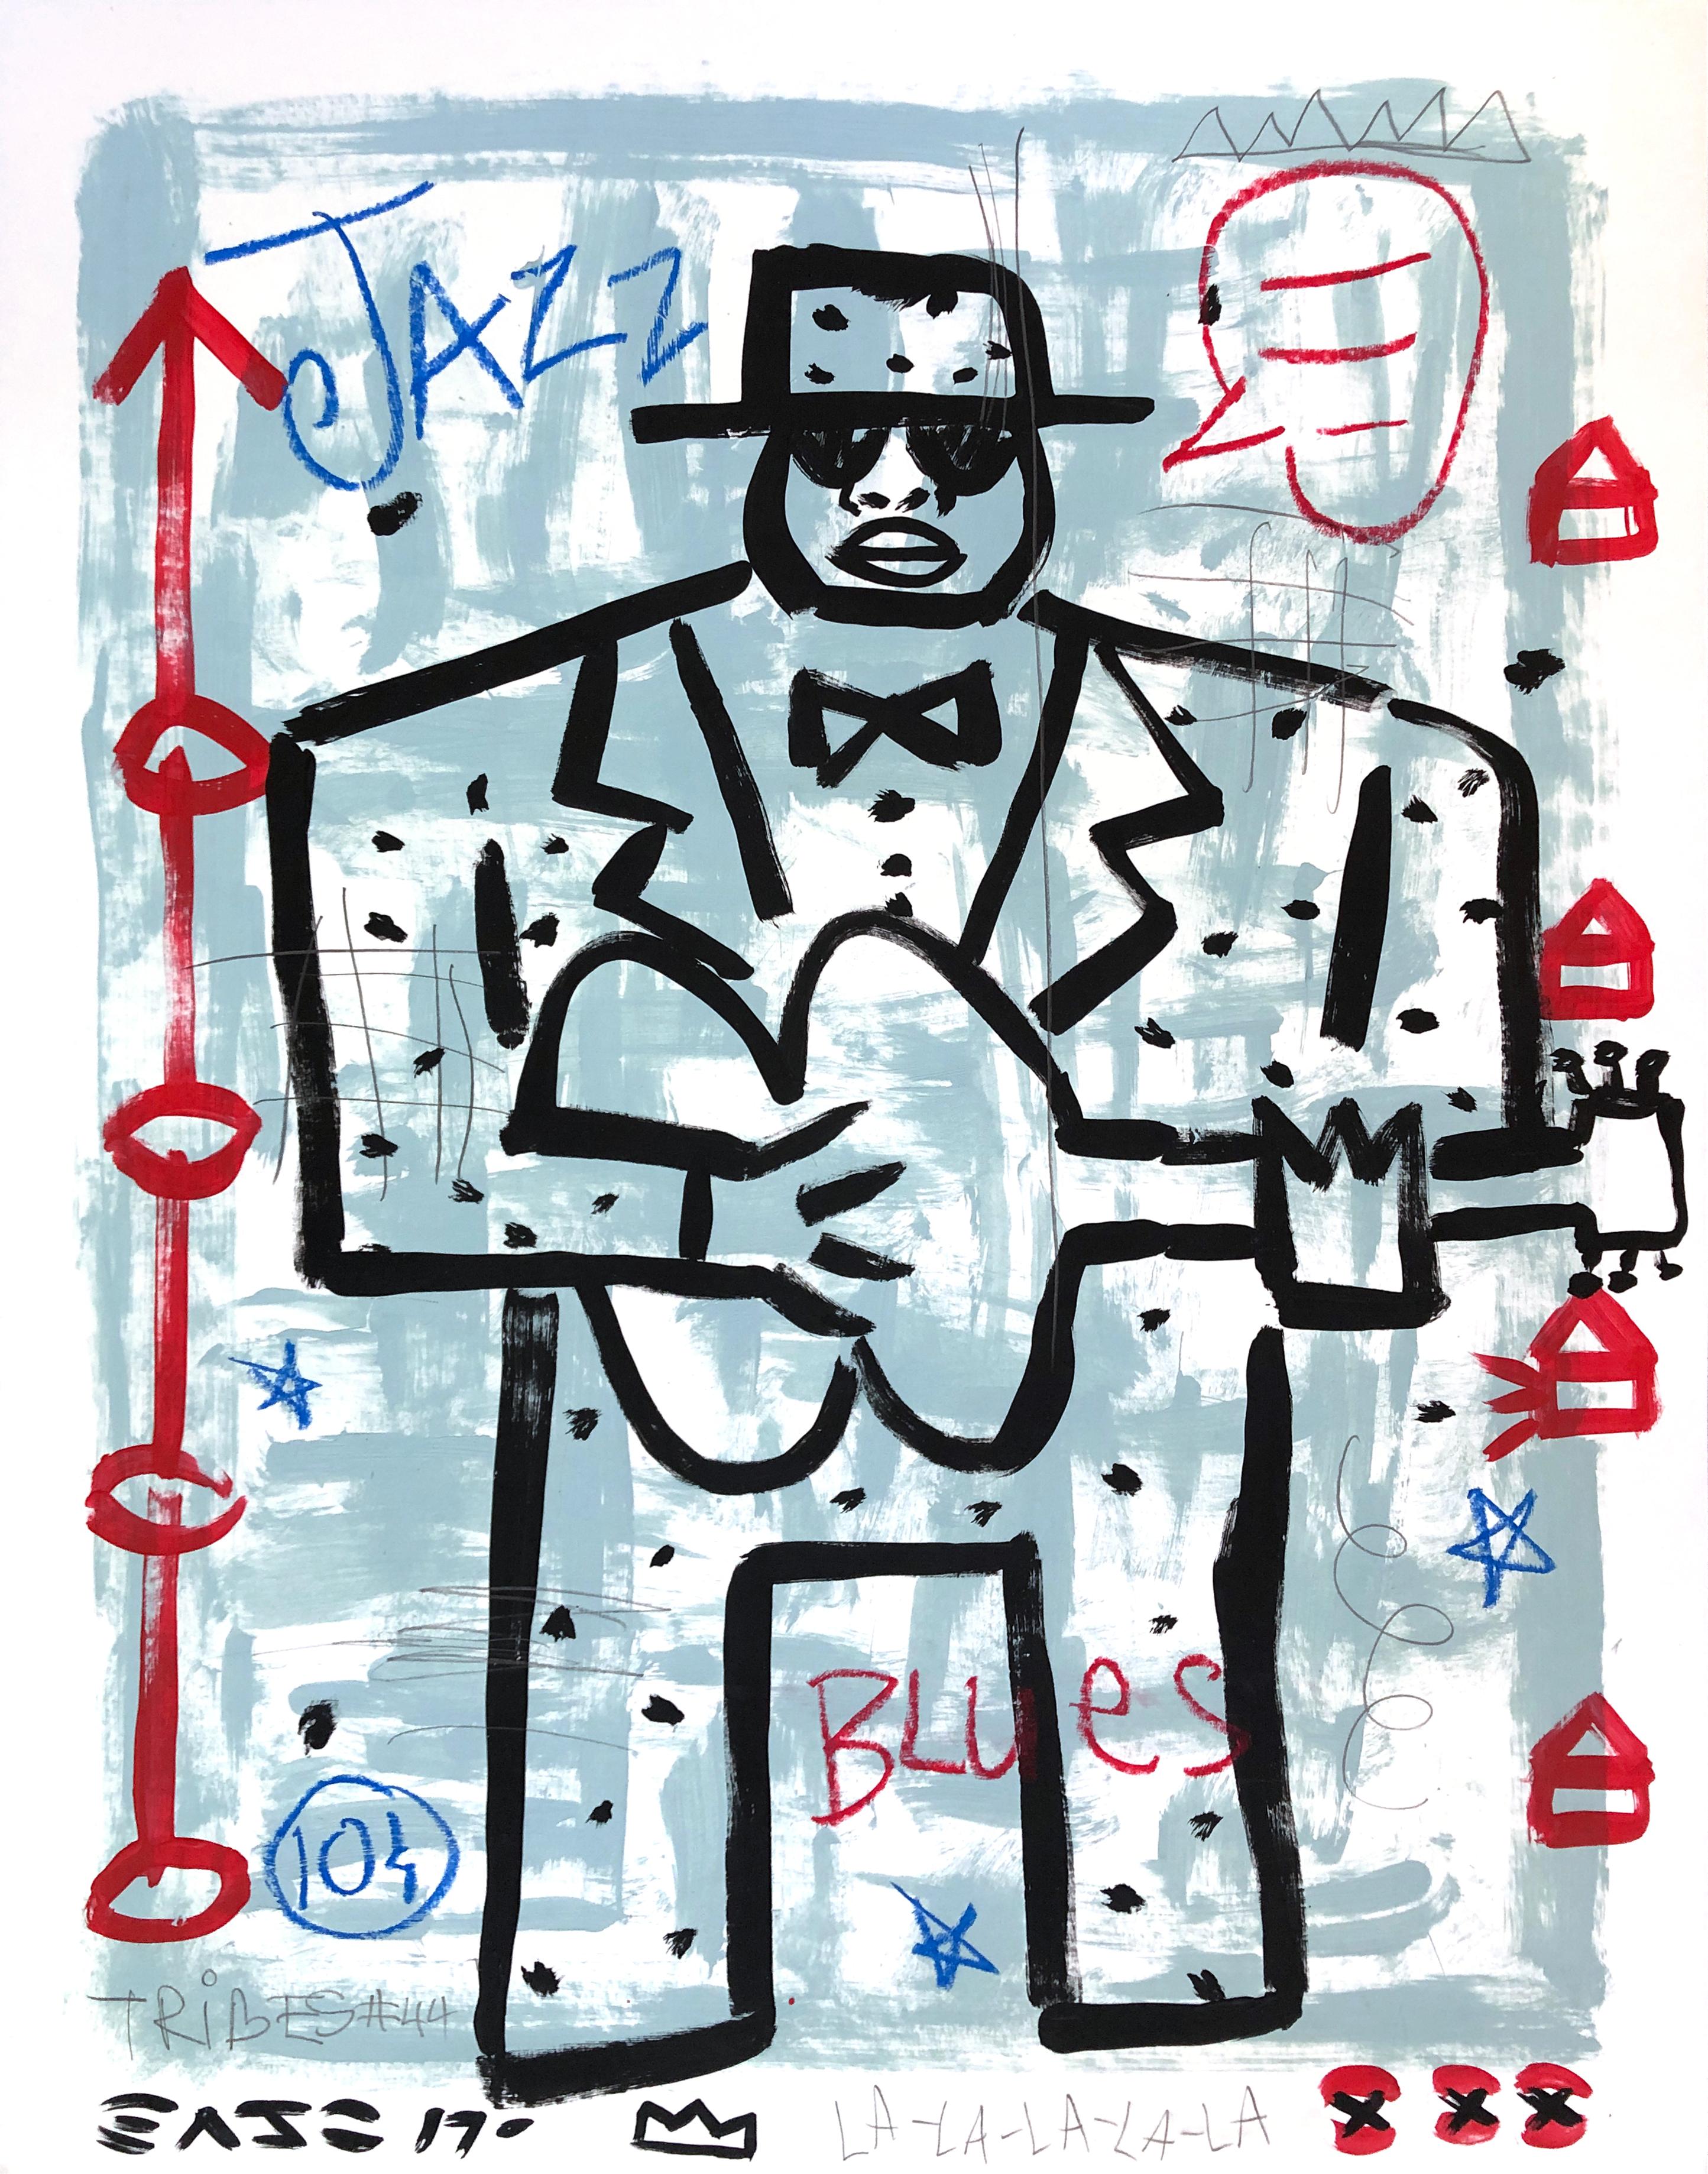 Singing The Jazz and Blues - Original Gary John Music Themed Artwork